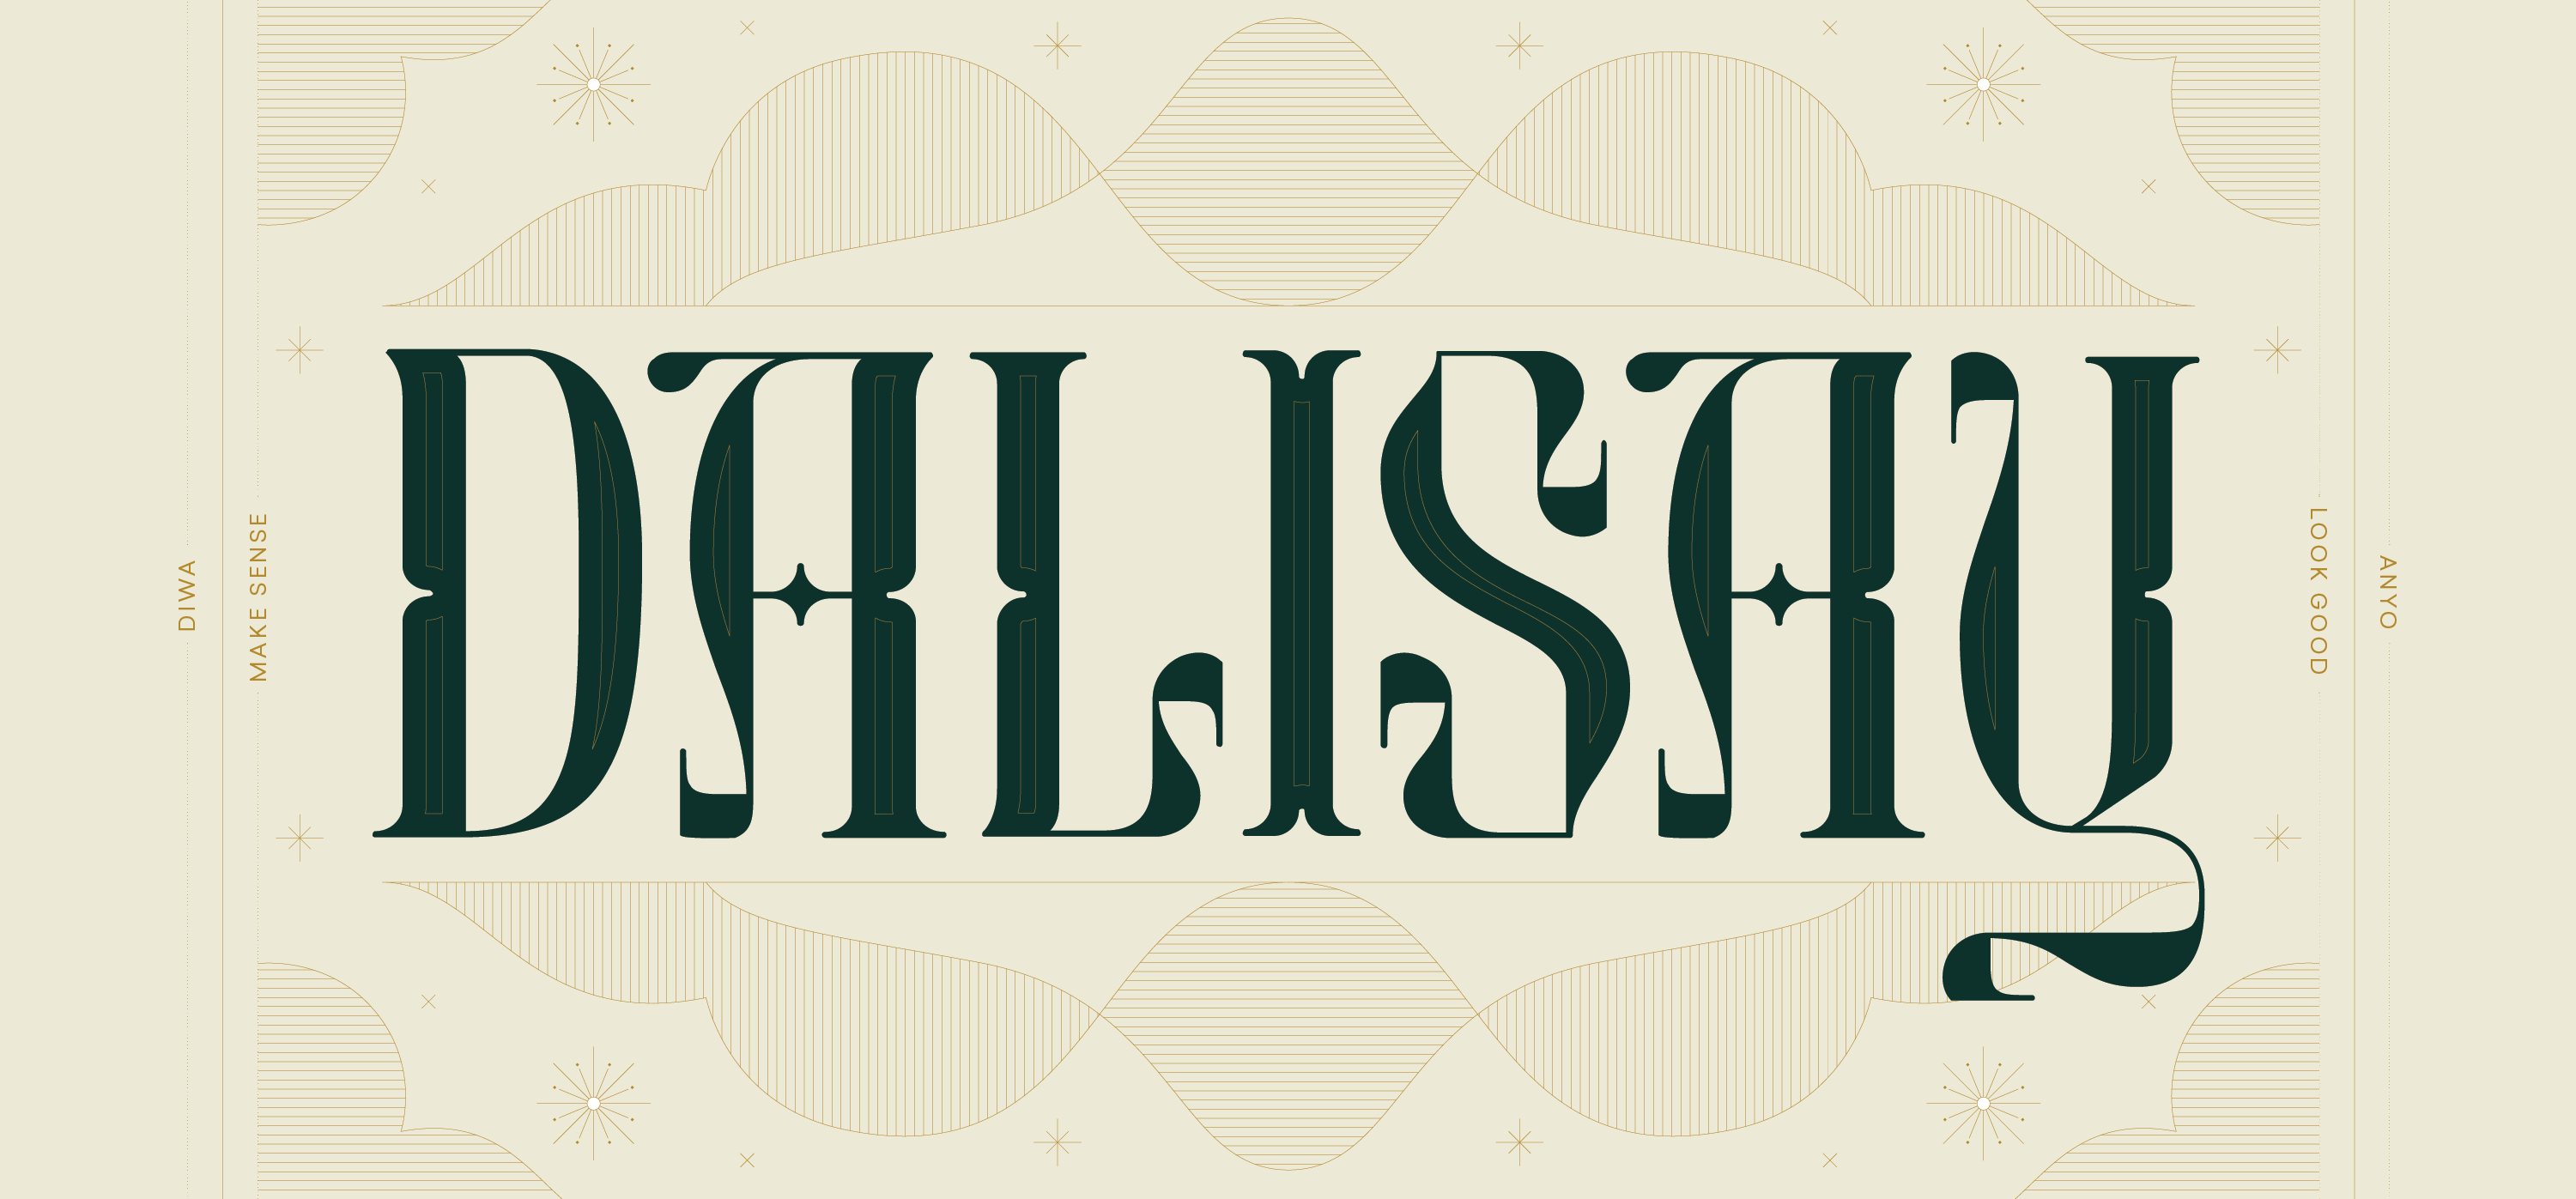 Typography application of the custom Filipino typeface Kundiman